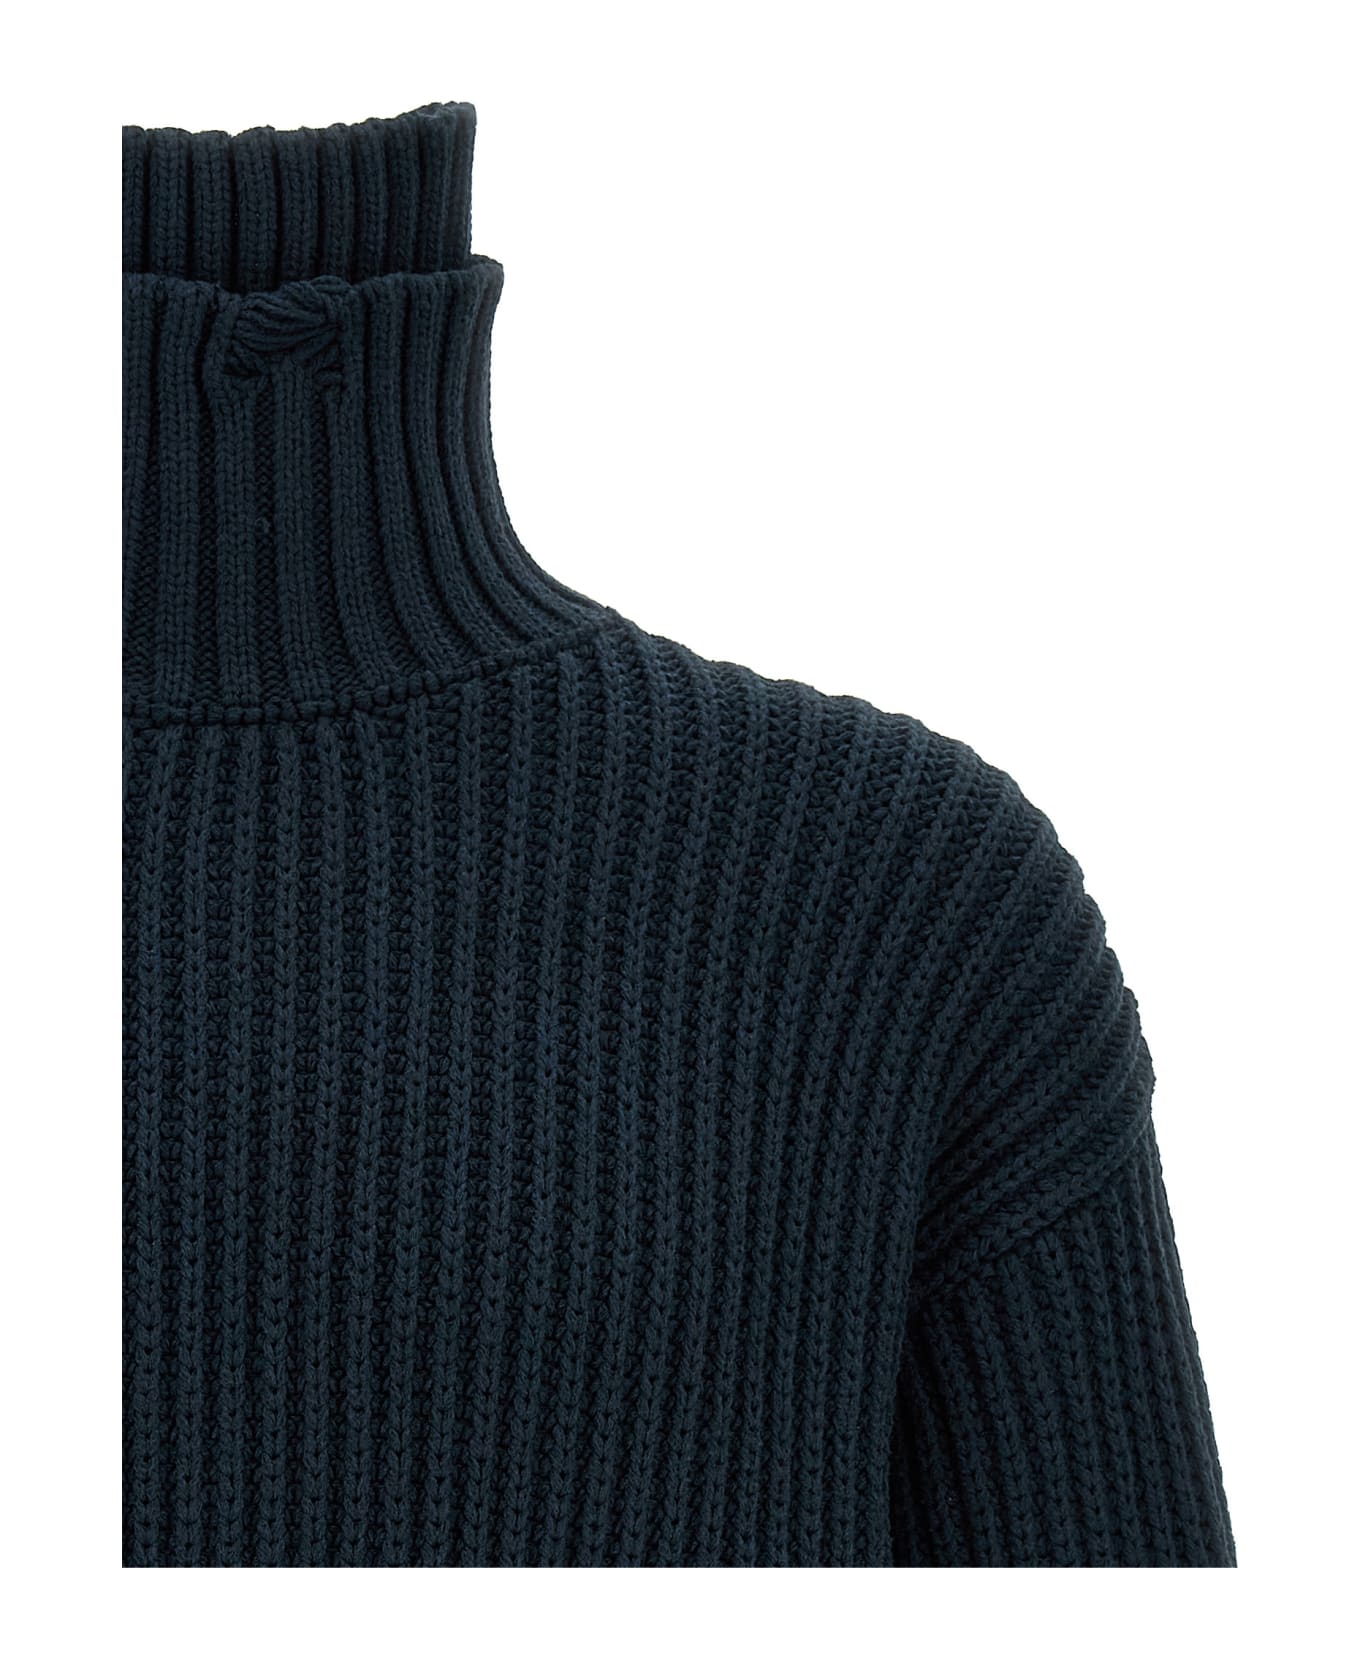 Dsquared2 Broken Stitch Double Collar Sweater - Blue ニットウェア